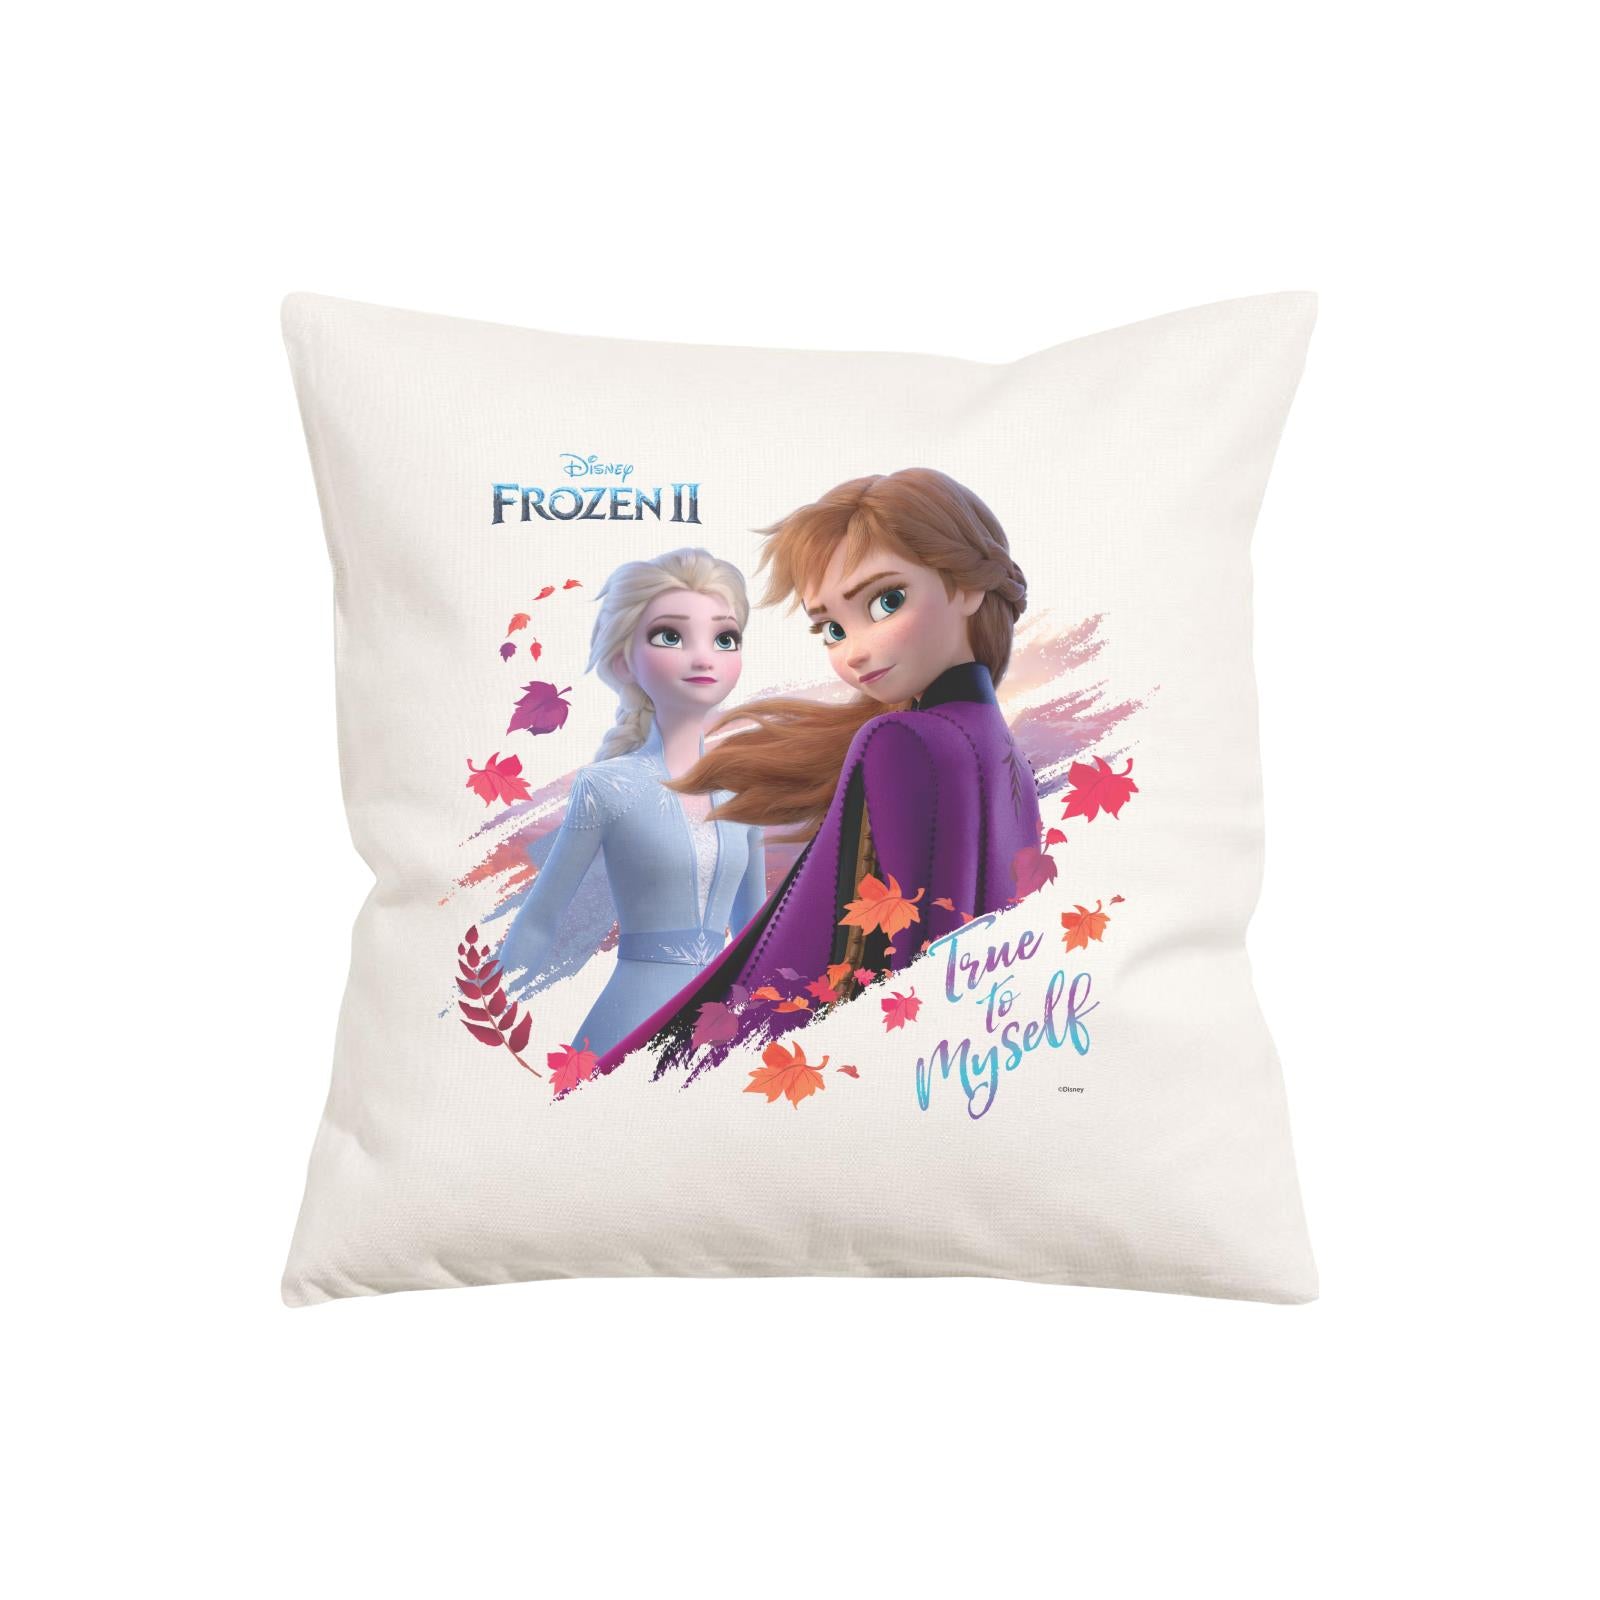 Disney Frozen 2 Destiny Calling Elsa Front Pillow Cushion